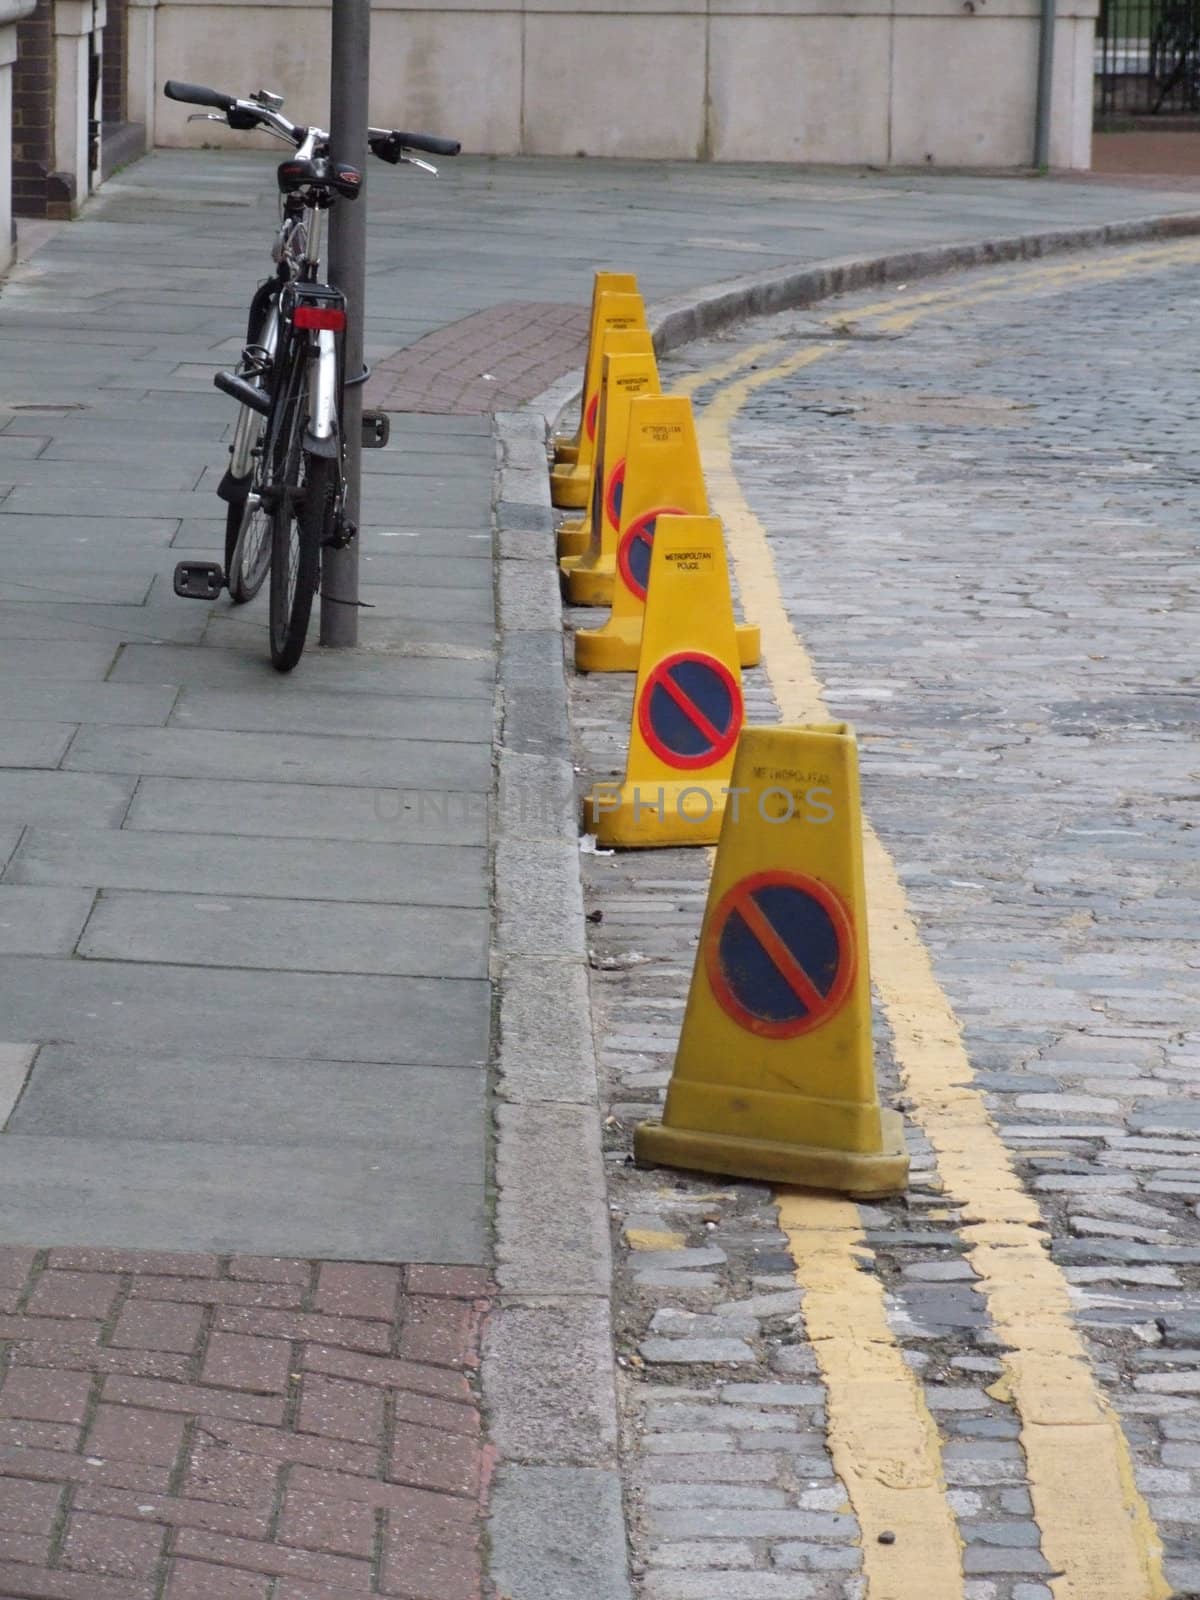 Peddle Bike Yellow Street Cones Shot by steveabcuk